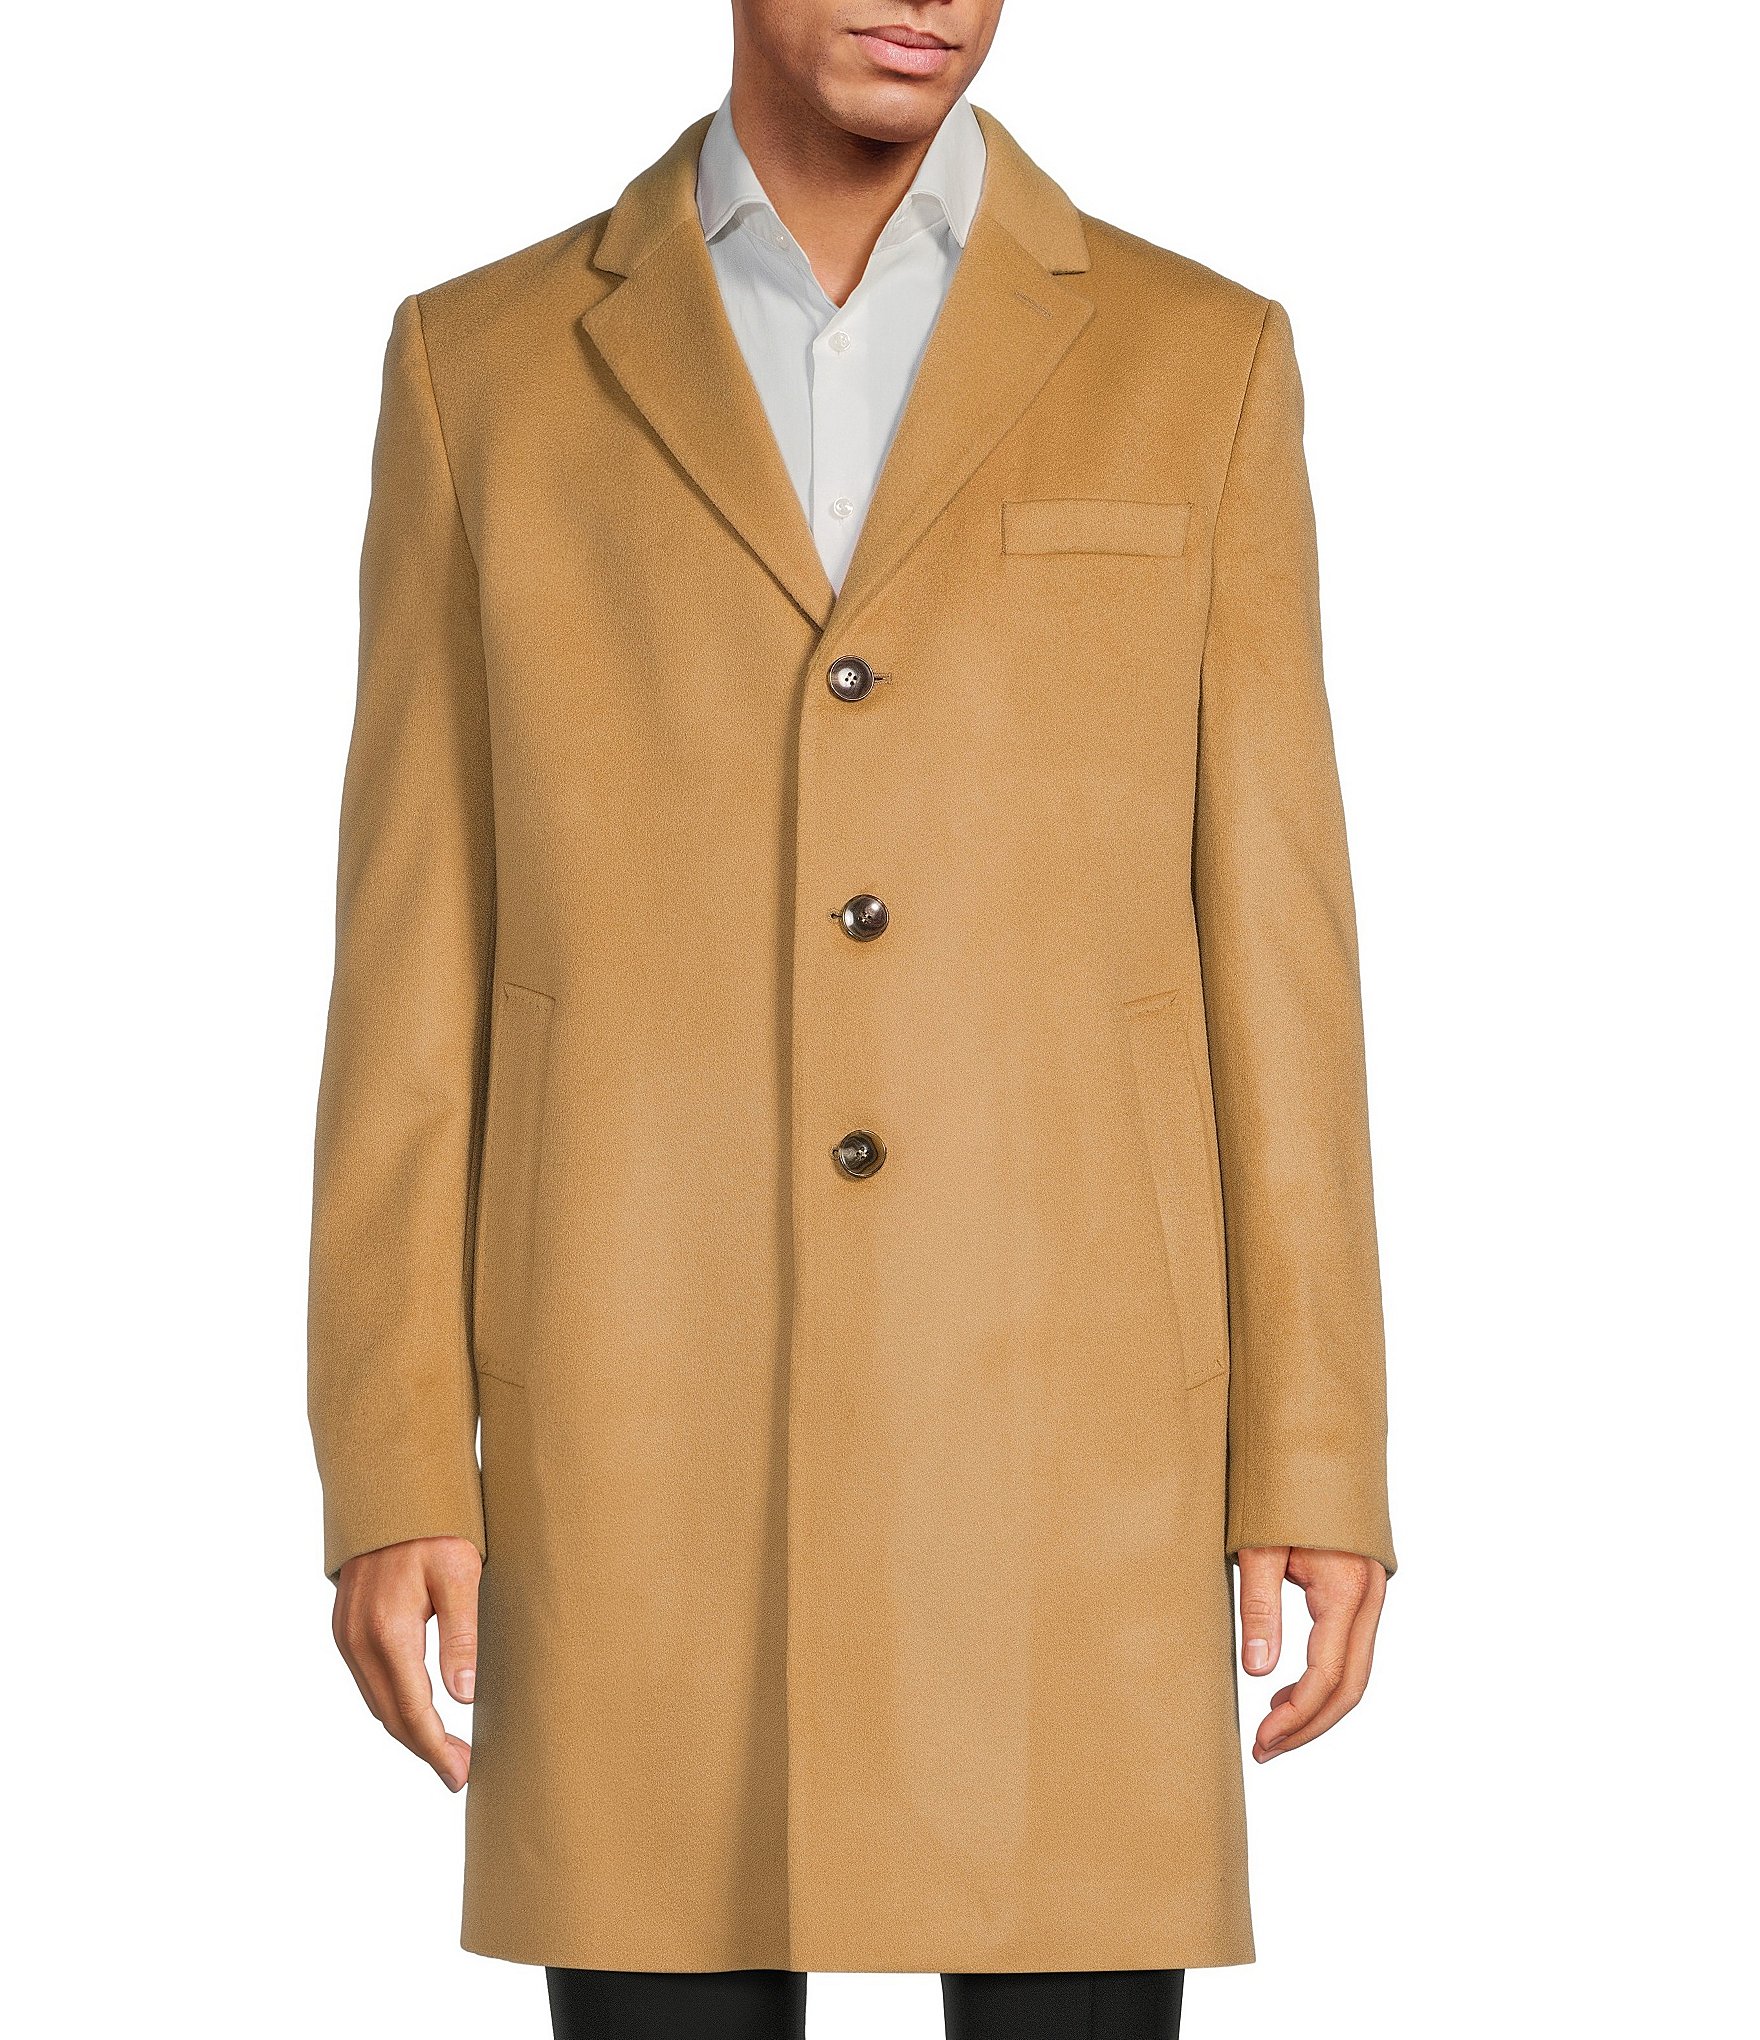 Hugo Boss Long Sleeve Wool/Cashmere Top Coat | Dillard's